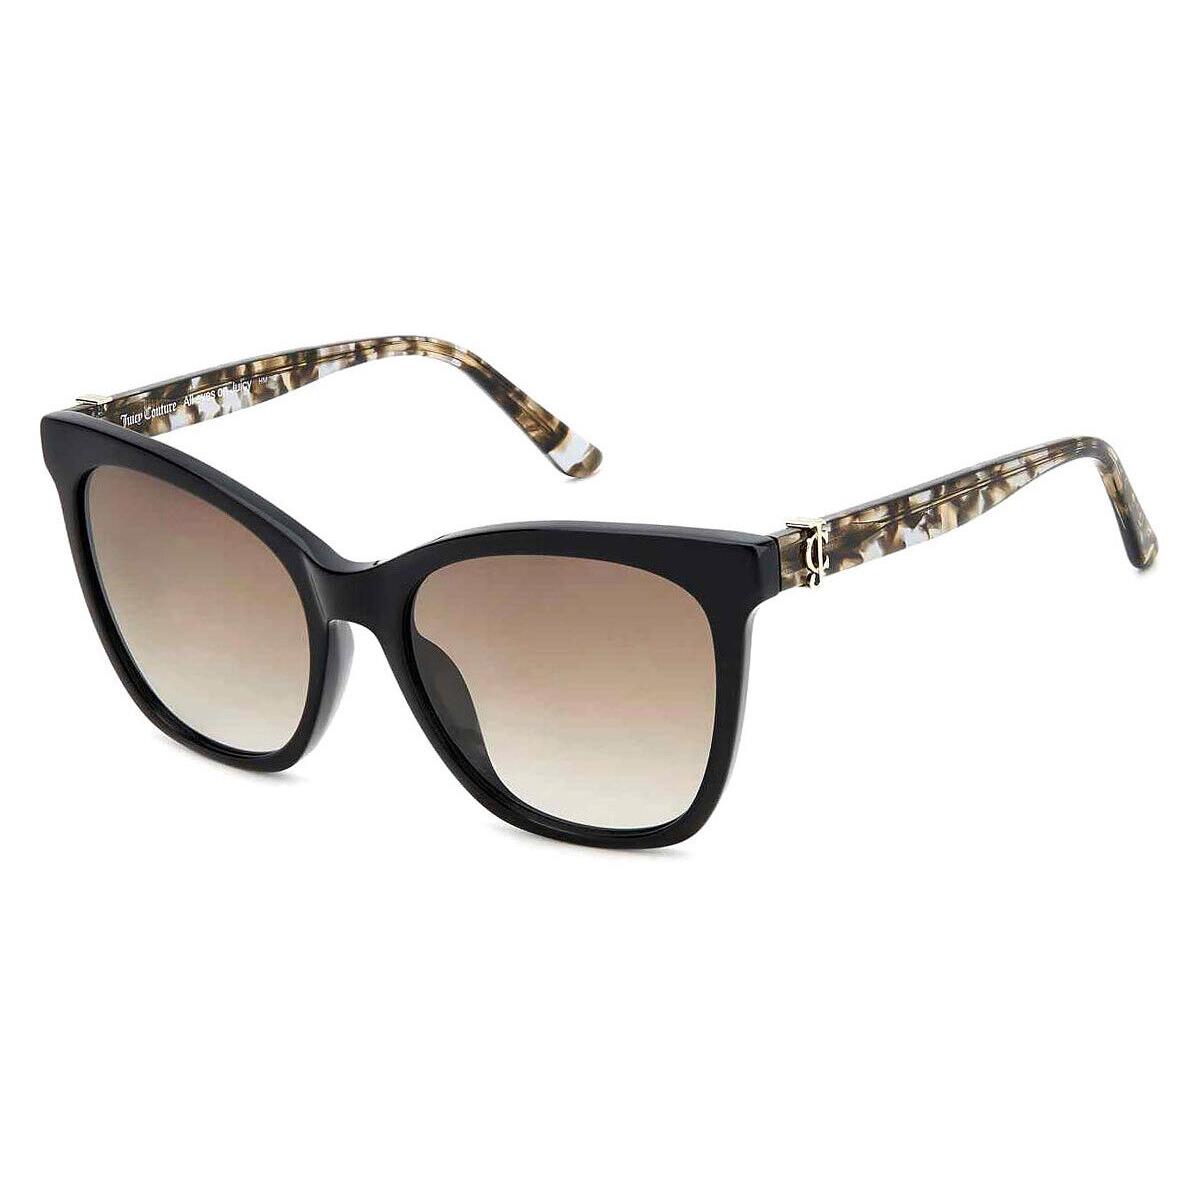 Juicy Couture Juc Sunglasses Black / Brown Gradient 55mm - Frame: Black / Brown Gradient, Lens: Brown Gradient